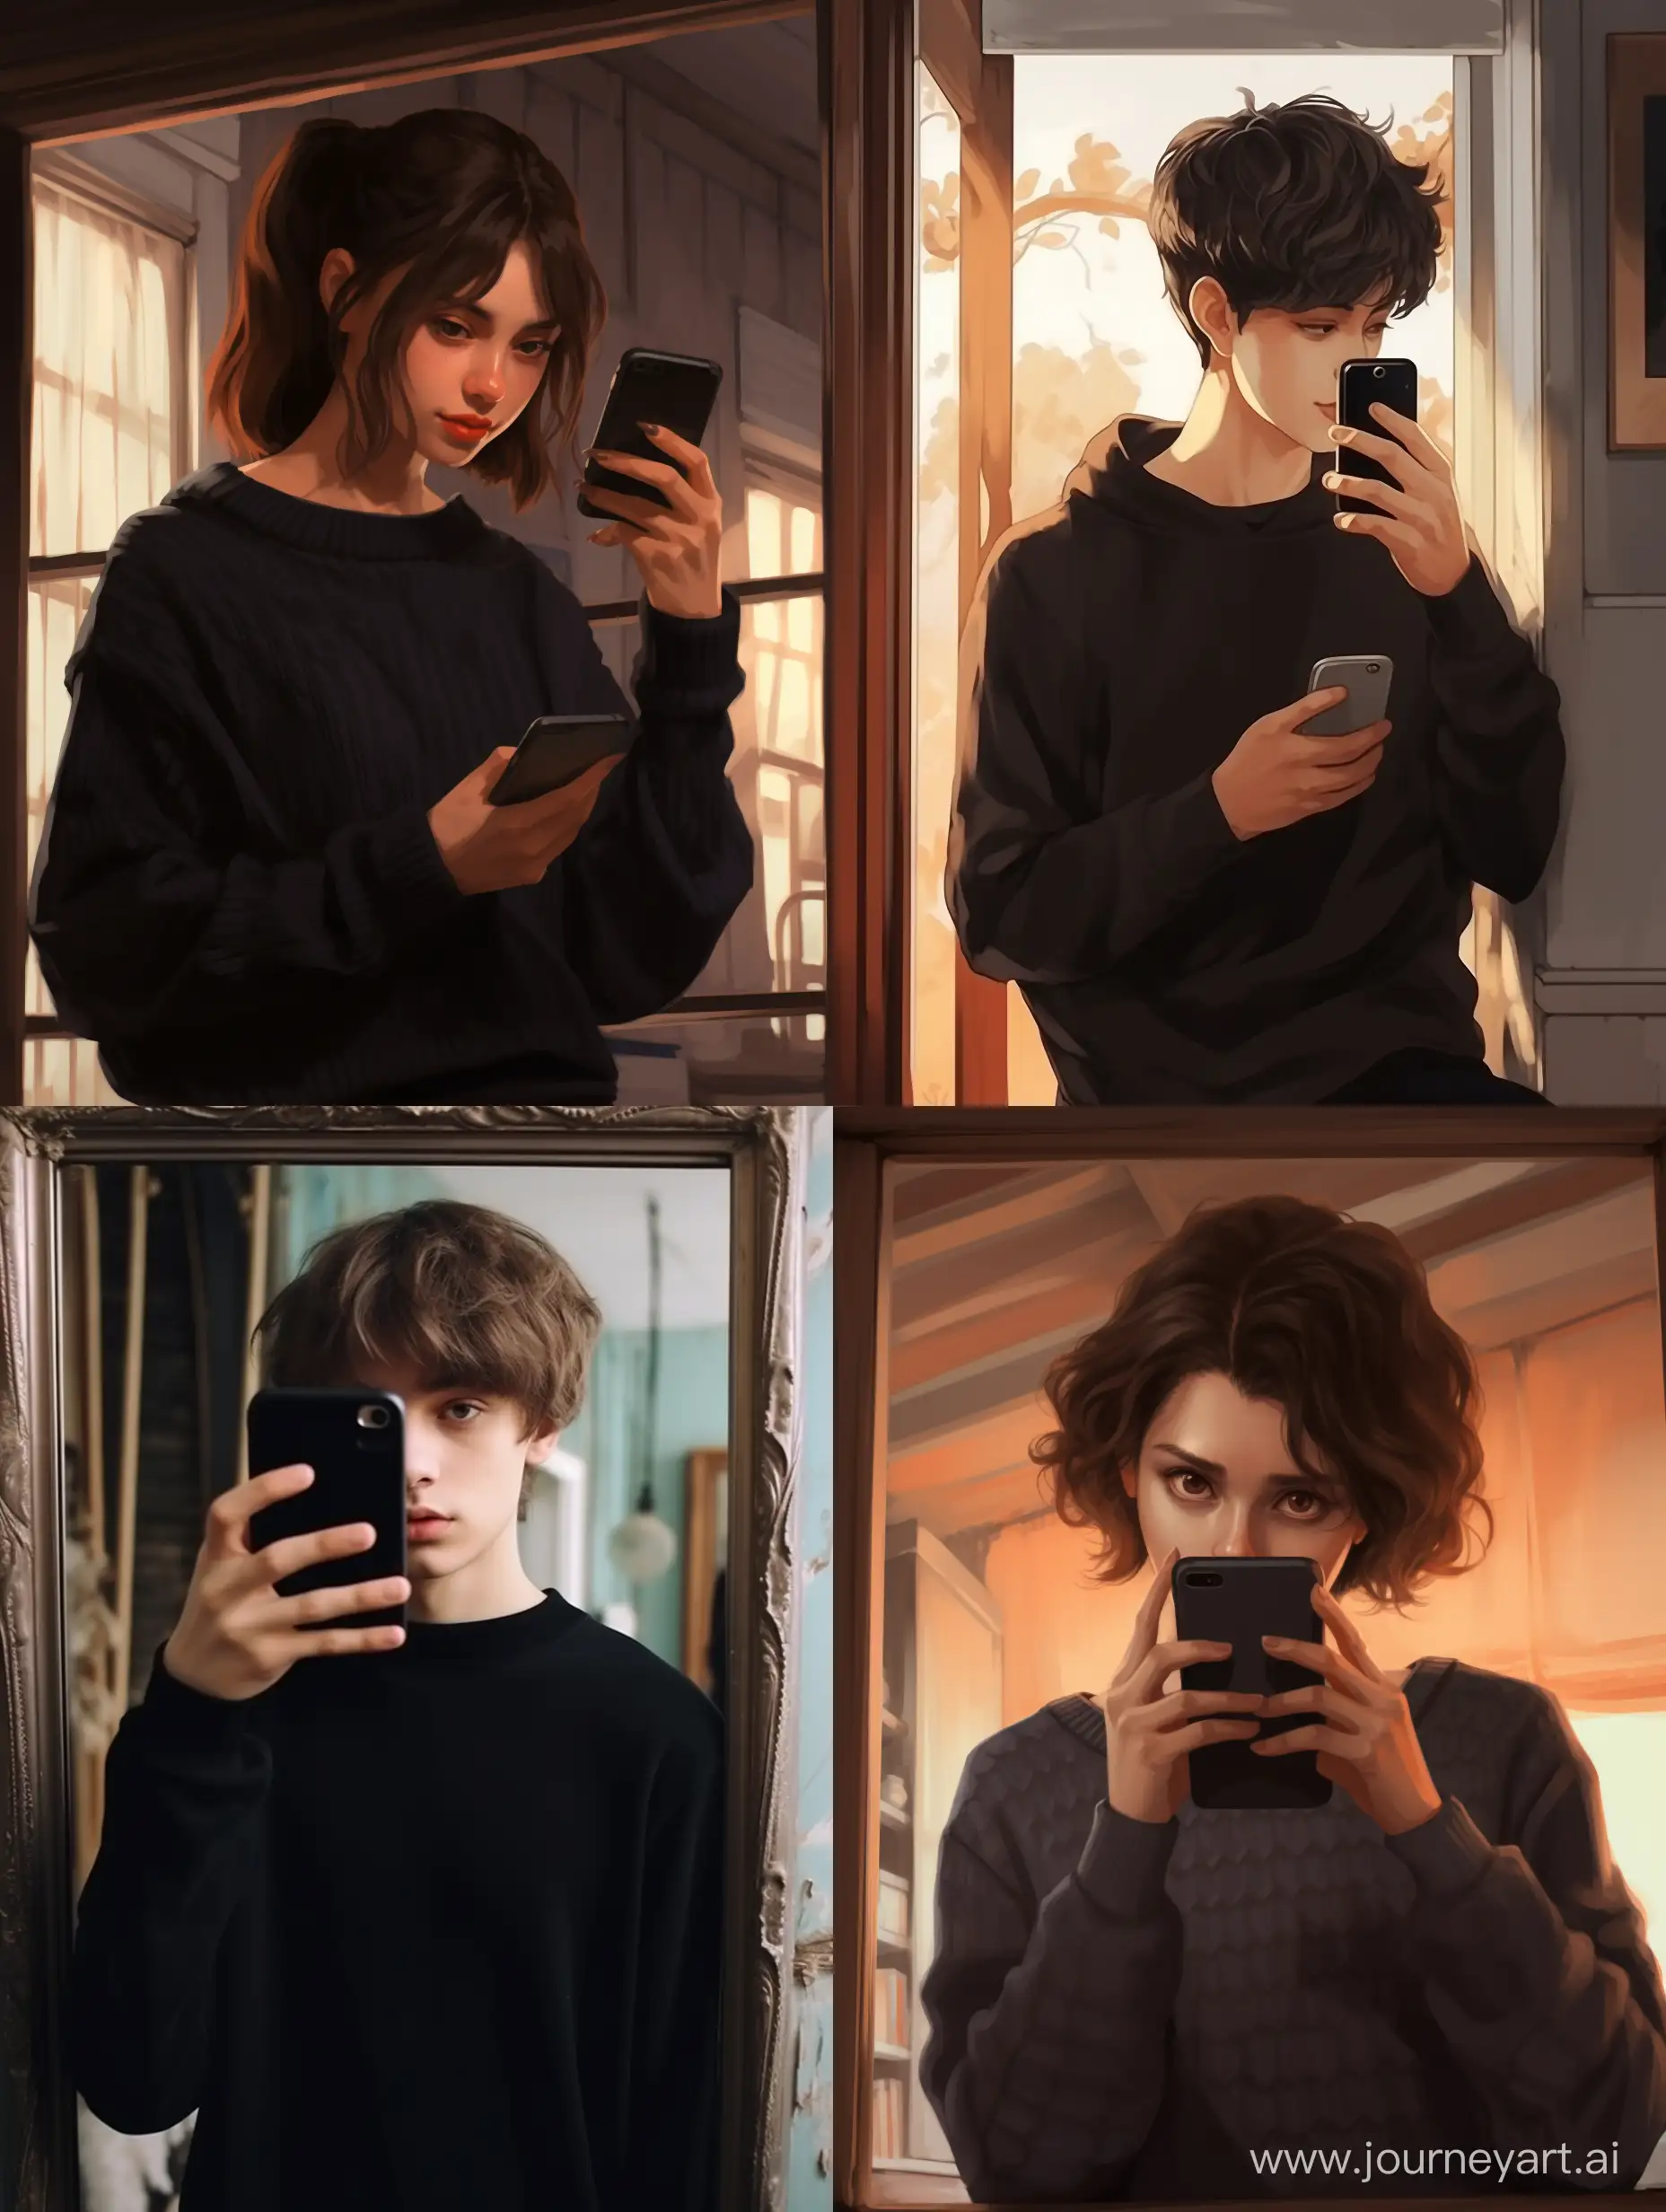 Stylish-Selfie-Modern-Homely-Scene-of-a-19YearOld-in-a-Black-Sweater